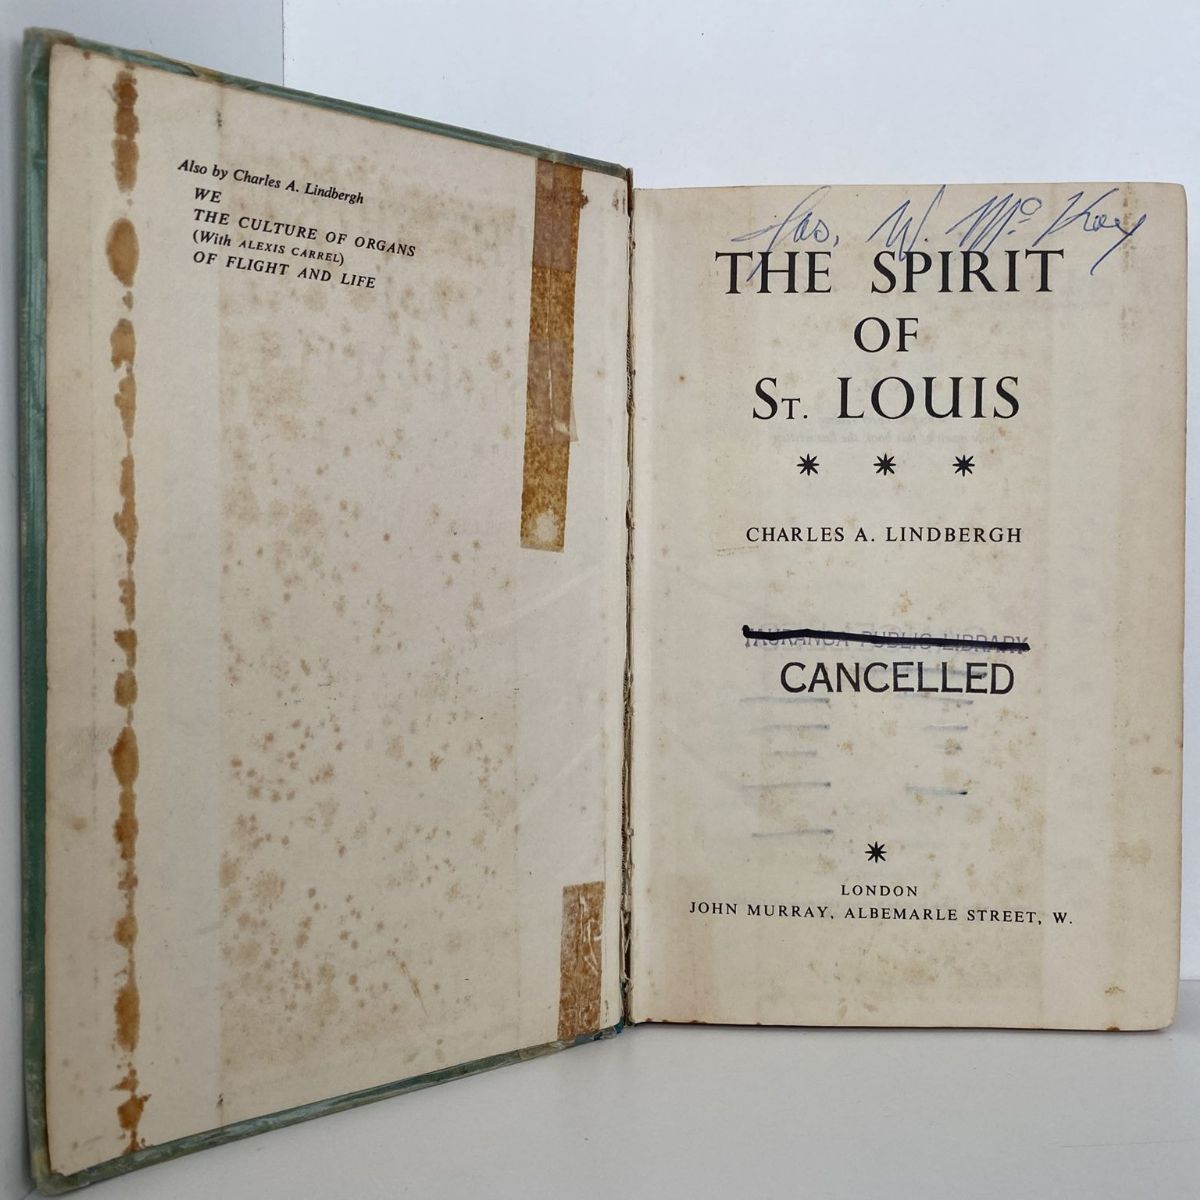 THE SPIRIT OF St. LOUIS